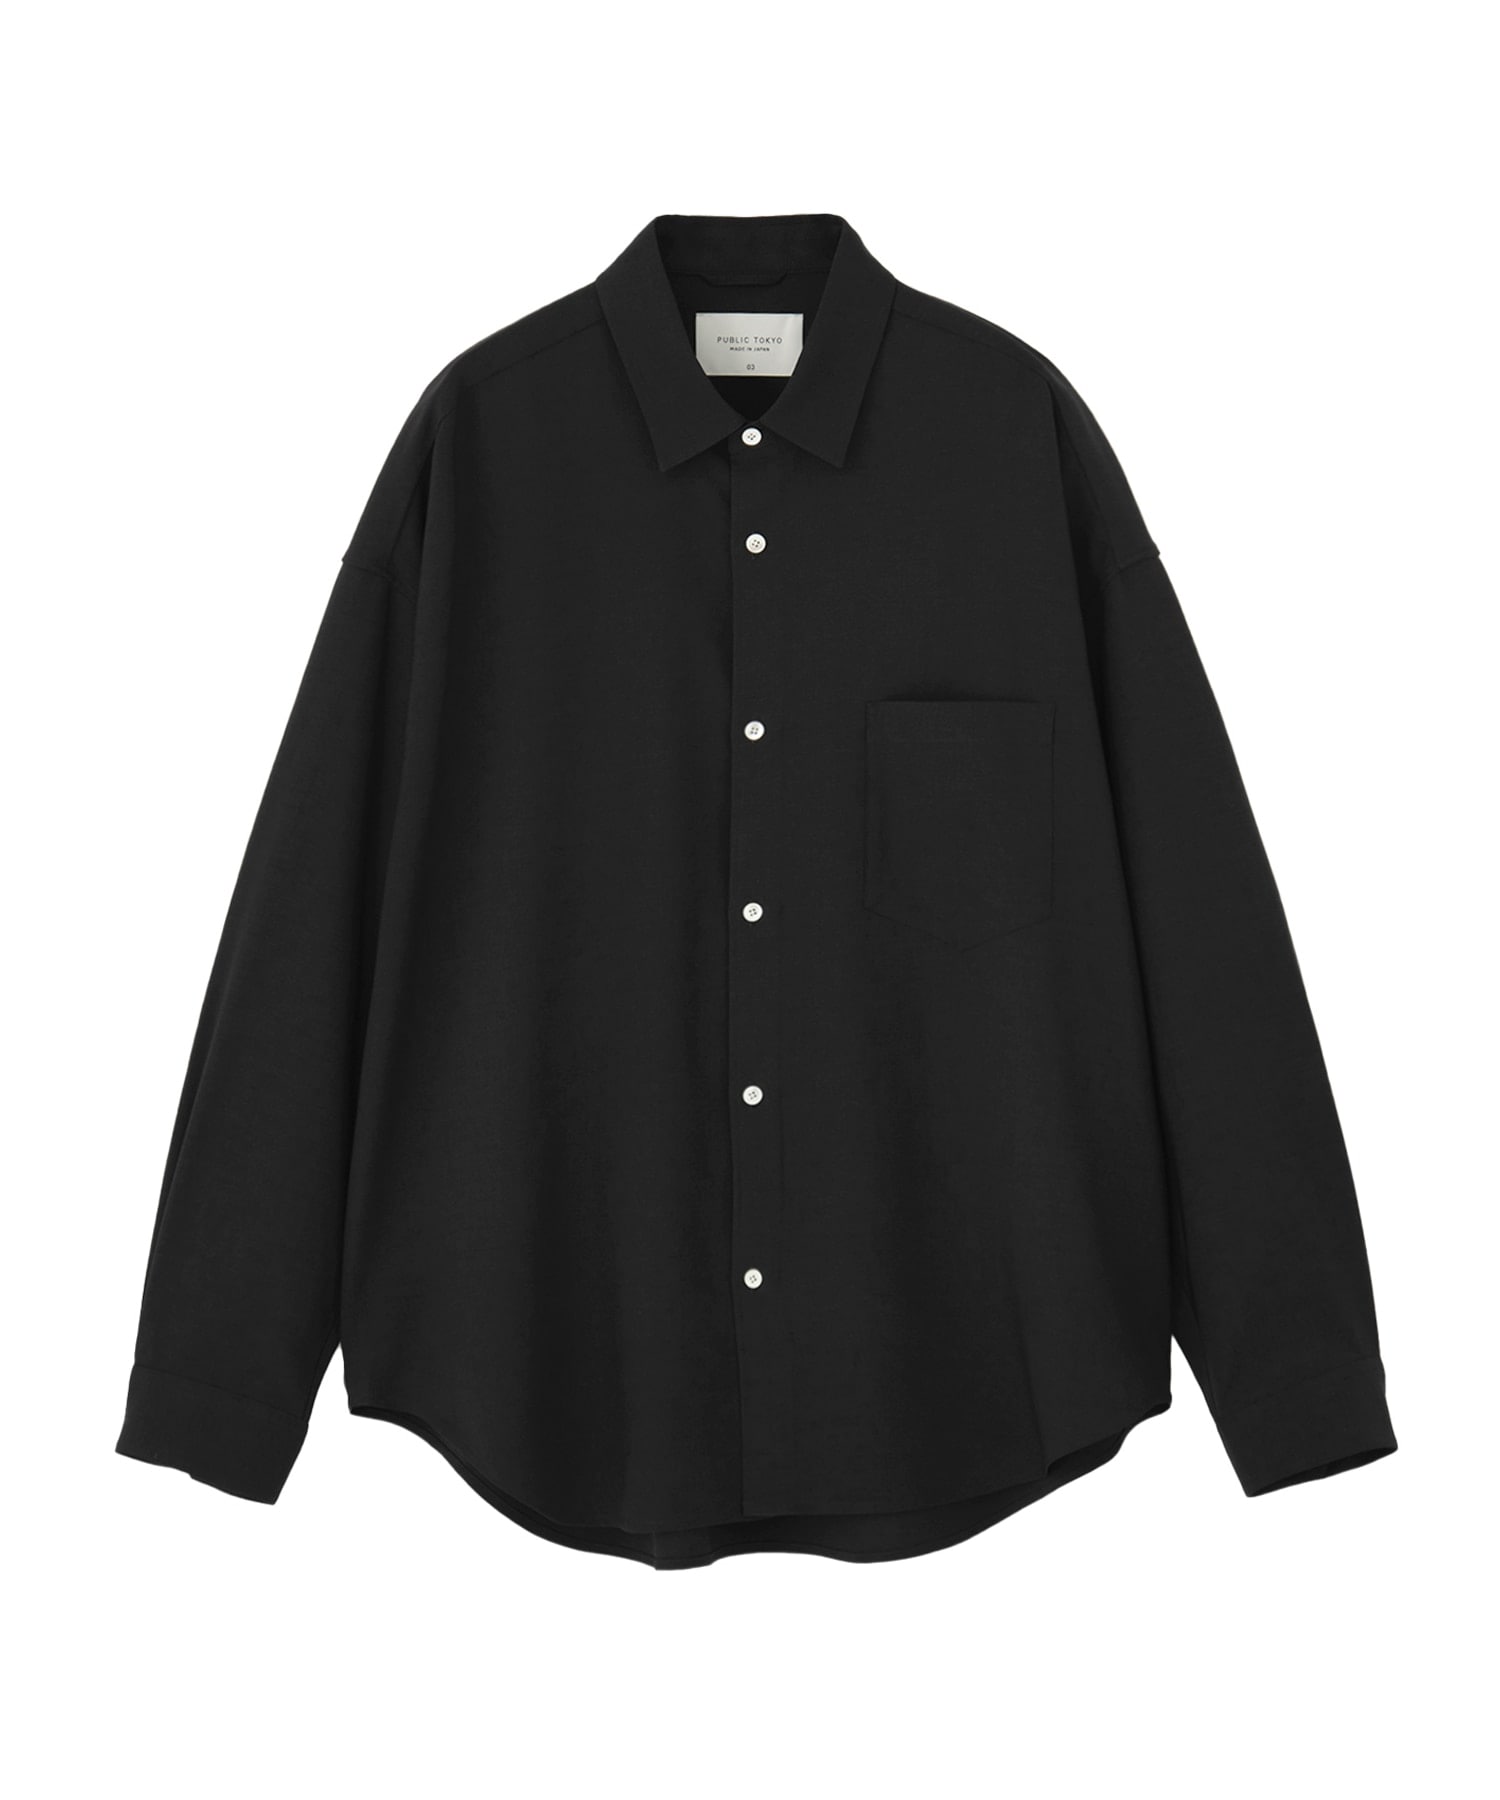 Public Tokyo 黒 コンフォートリラックスシャツ